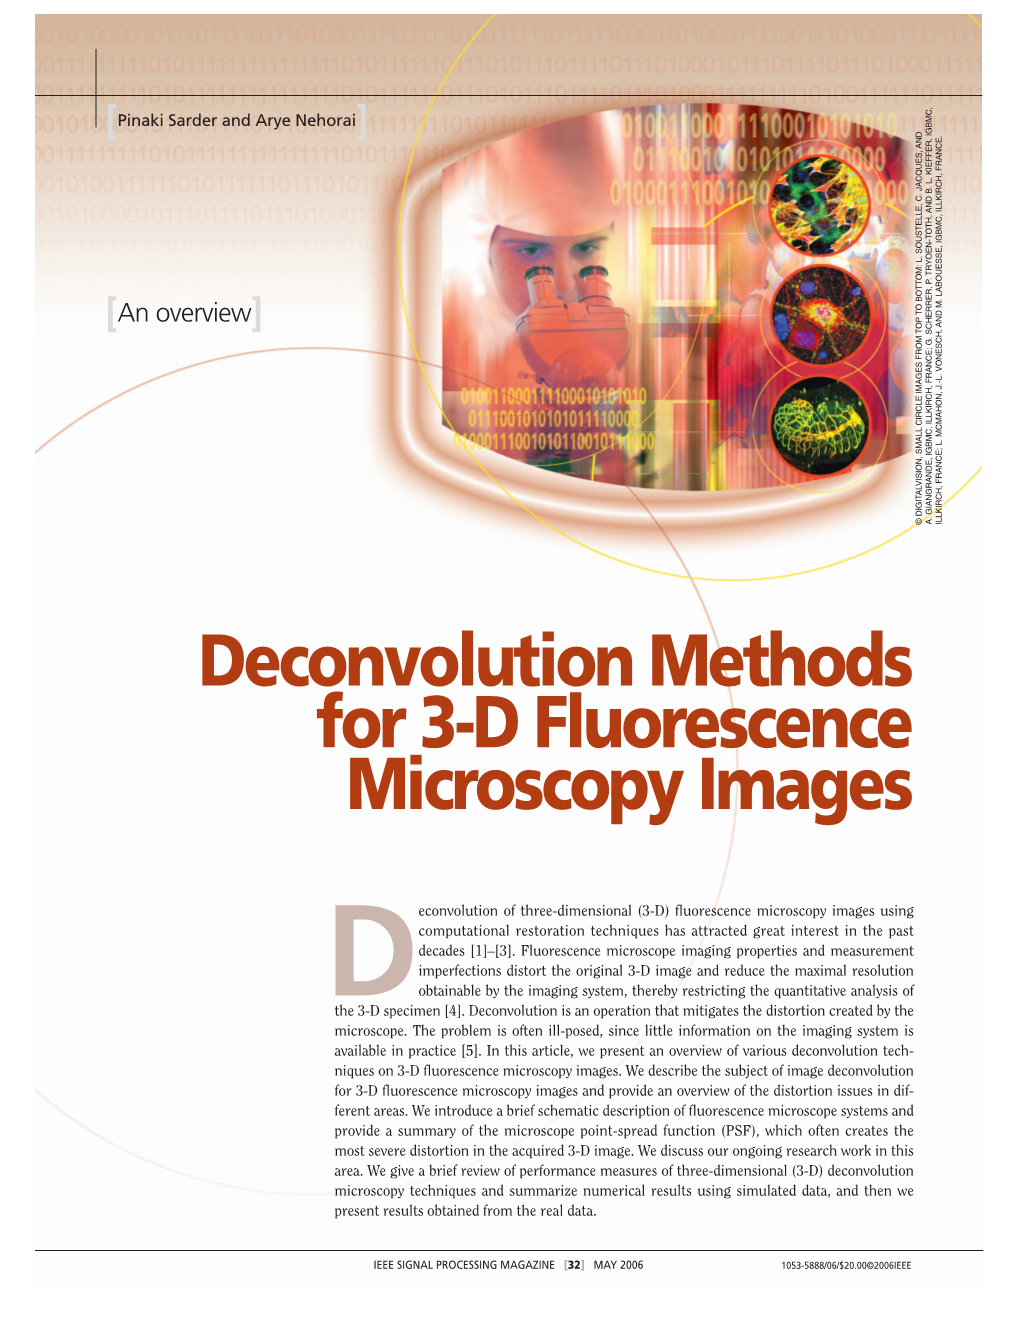 Deconvolution Methods for 3-D Fluorescence Microscopy Images